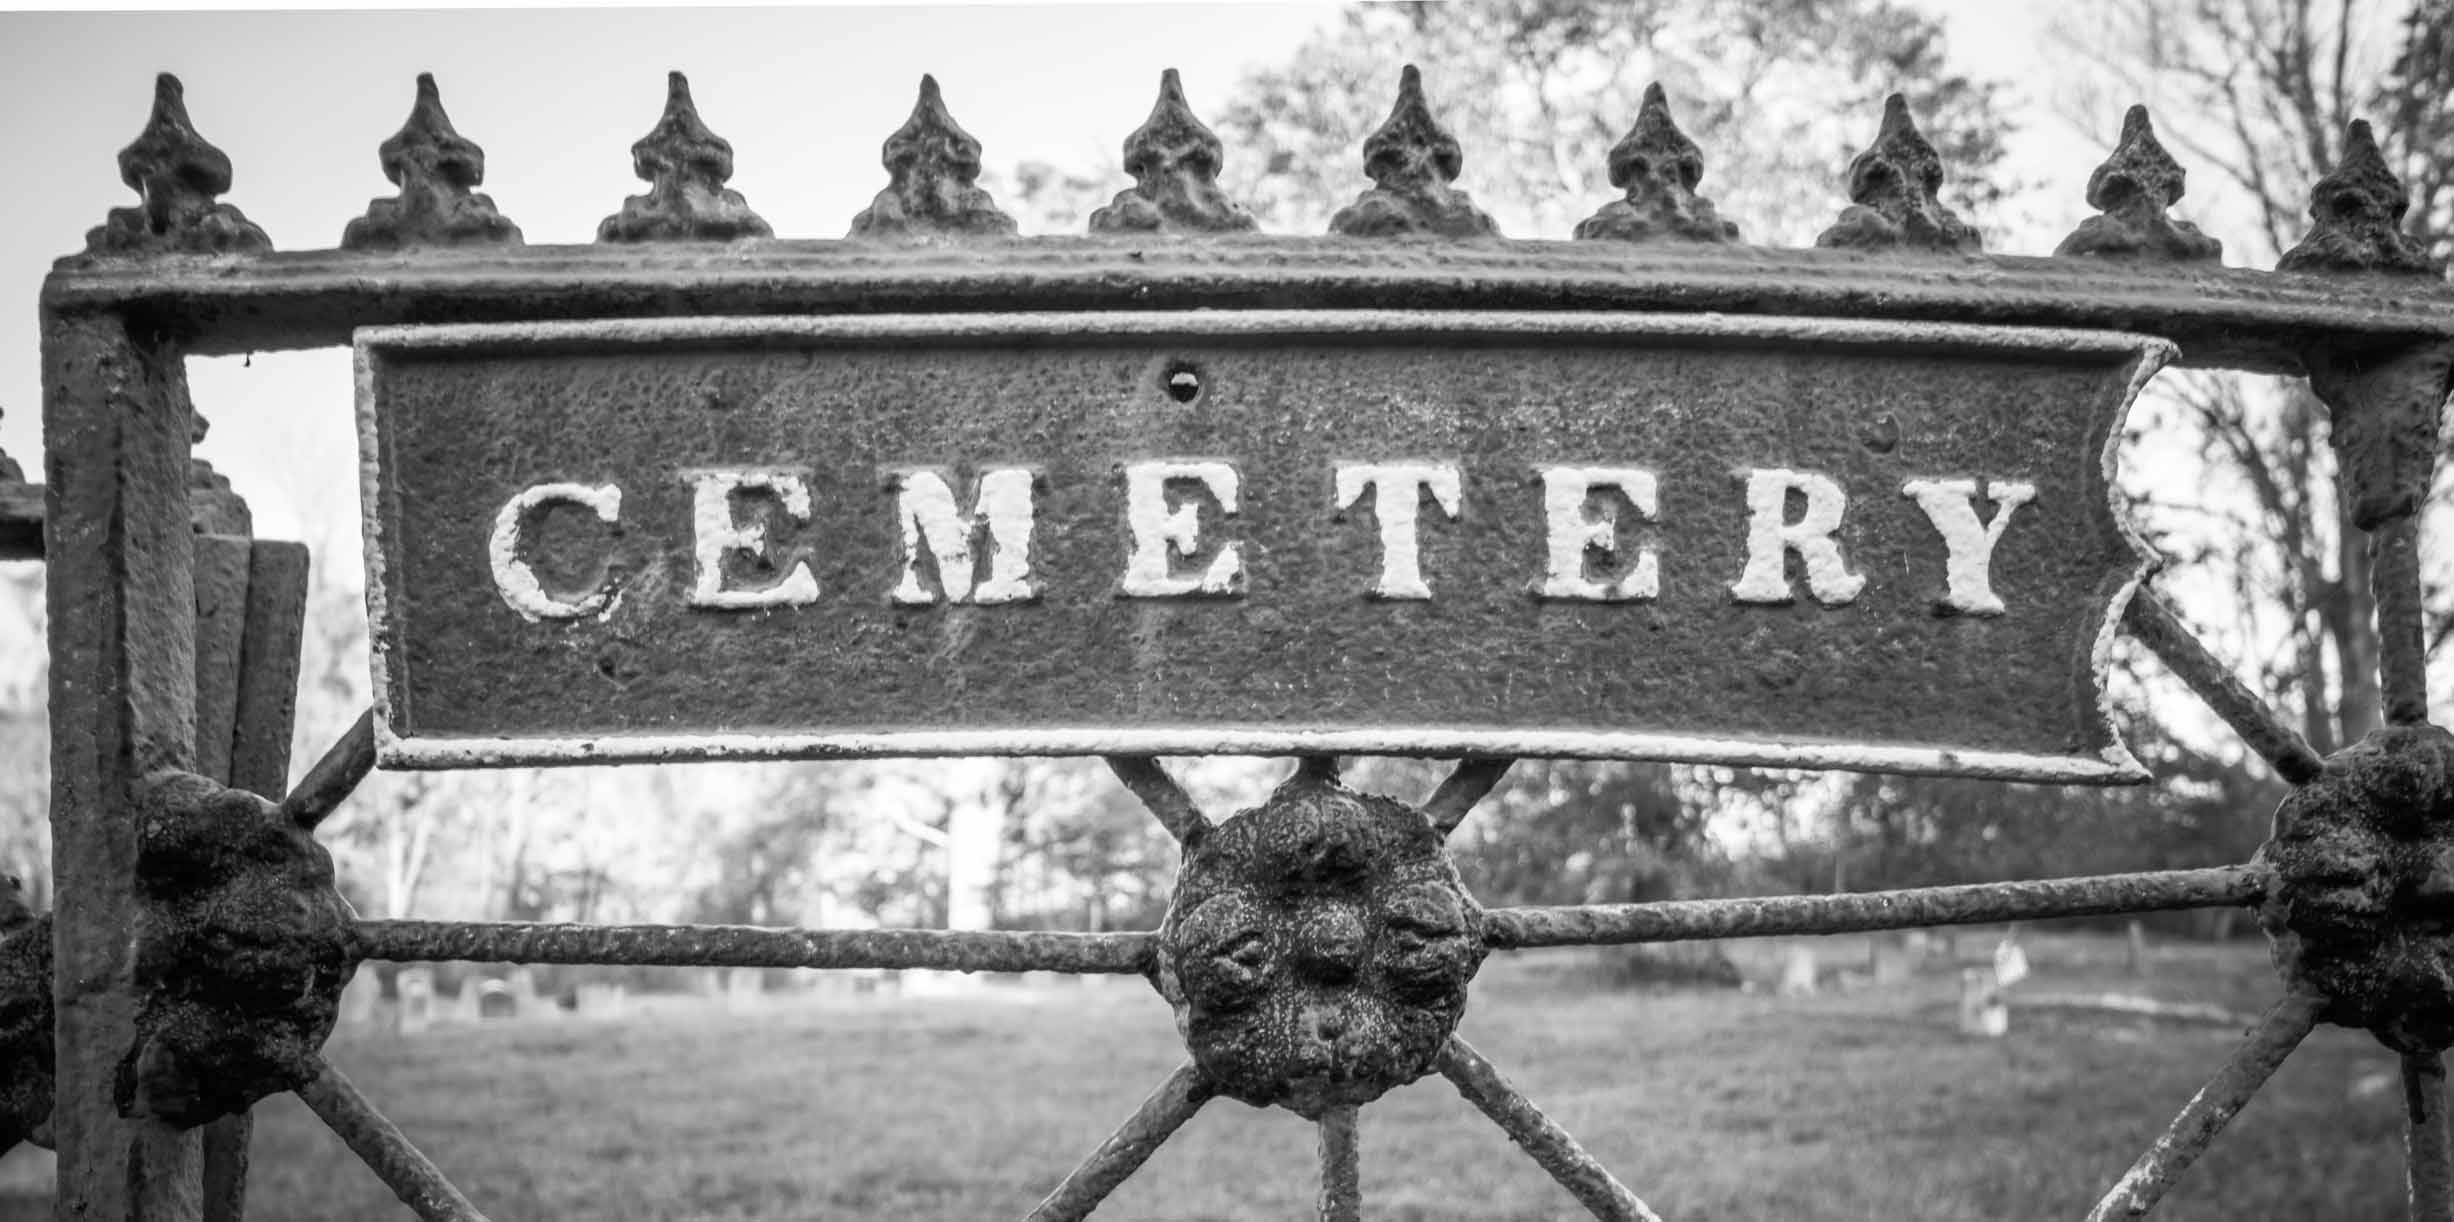 Share a Cemetery